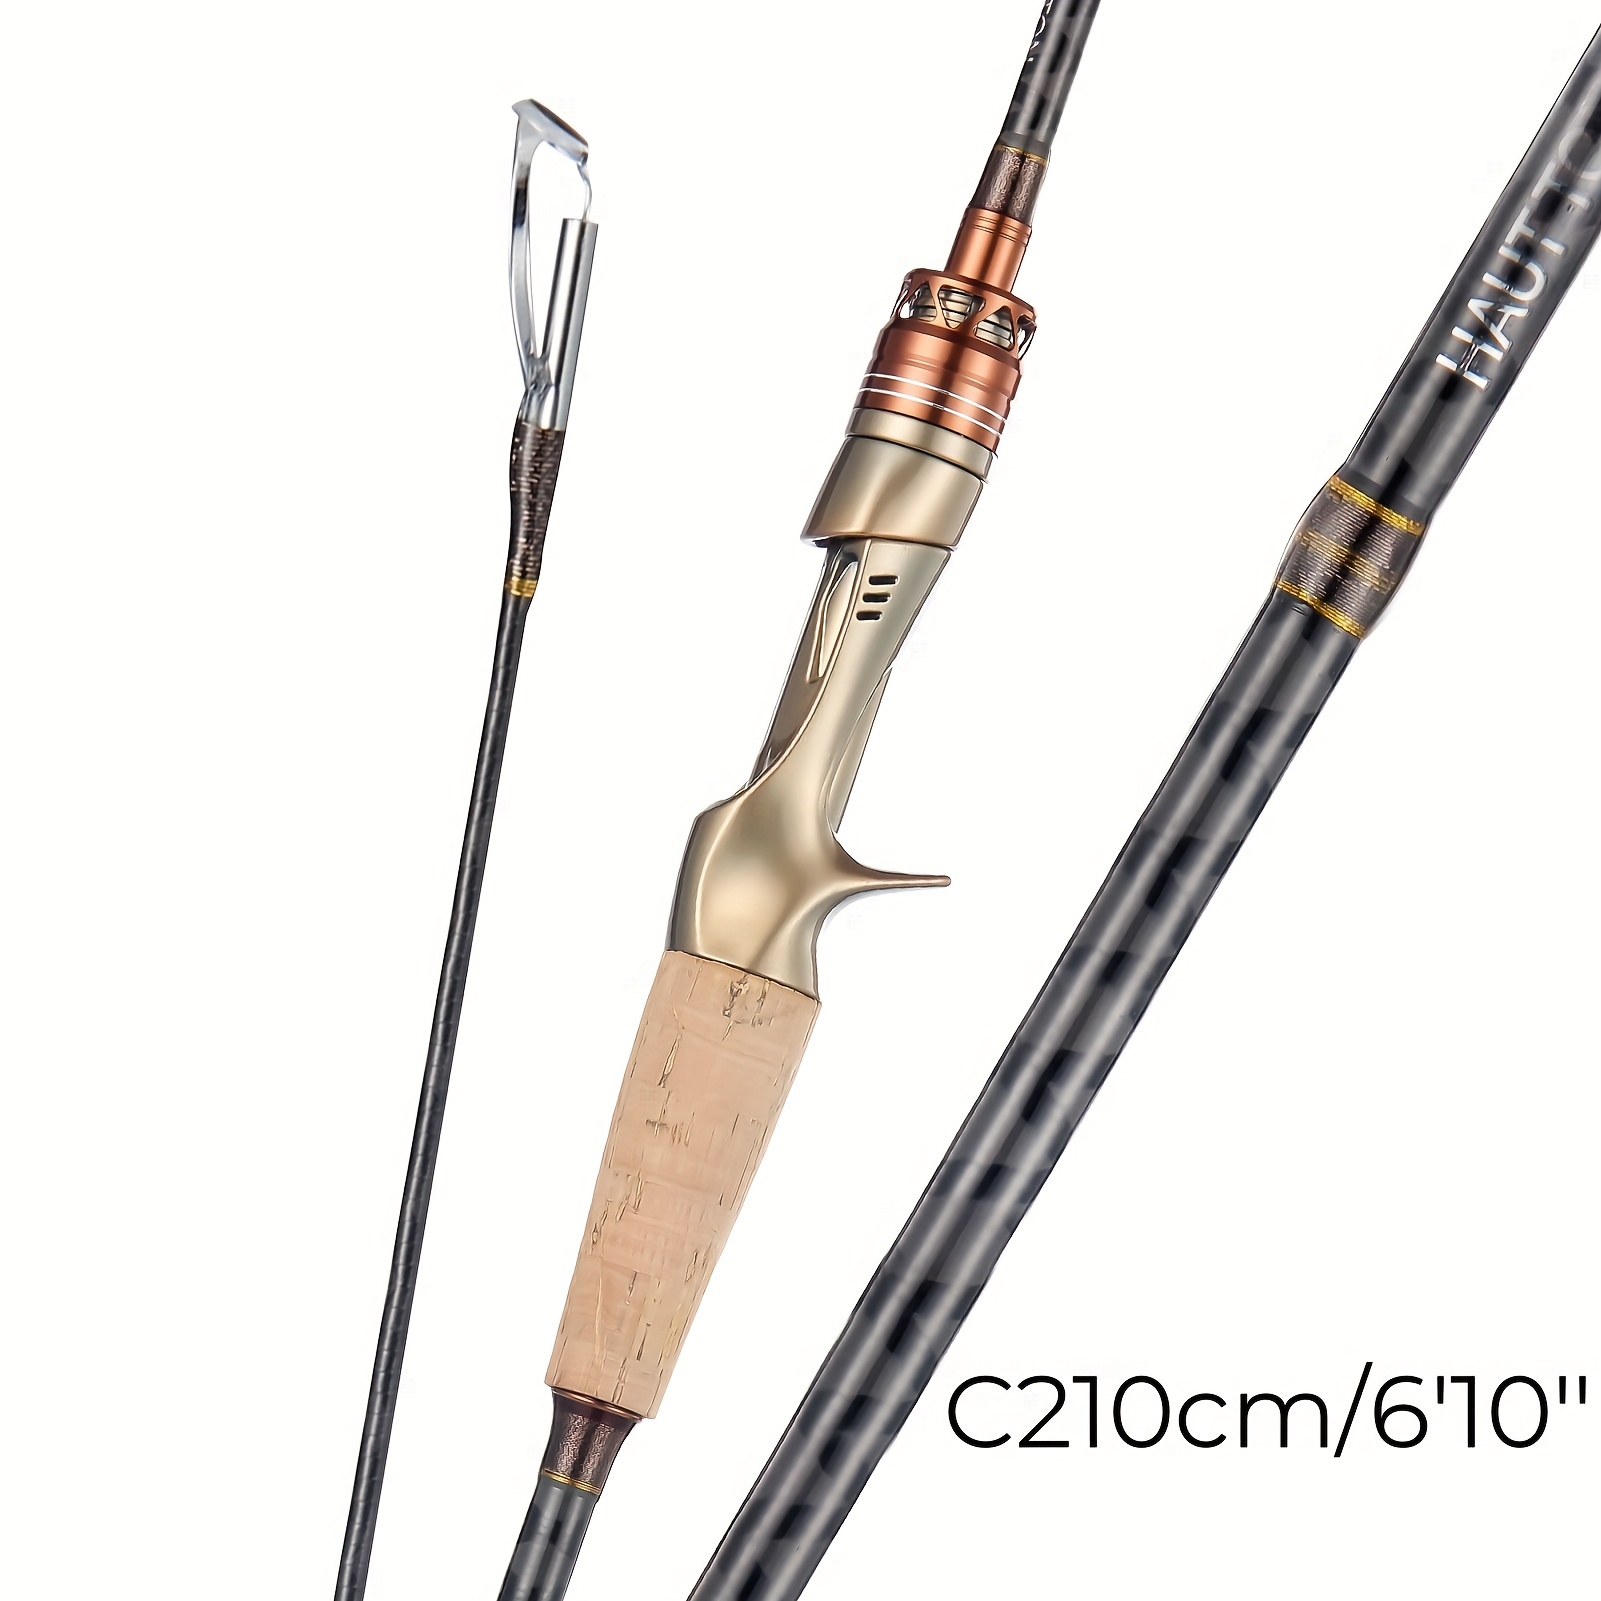  Fenwick HMX Spinning Fishing Rod, 6' - Medium Light - 1pcs :  Sports & Outdoors